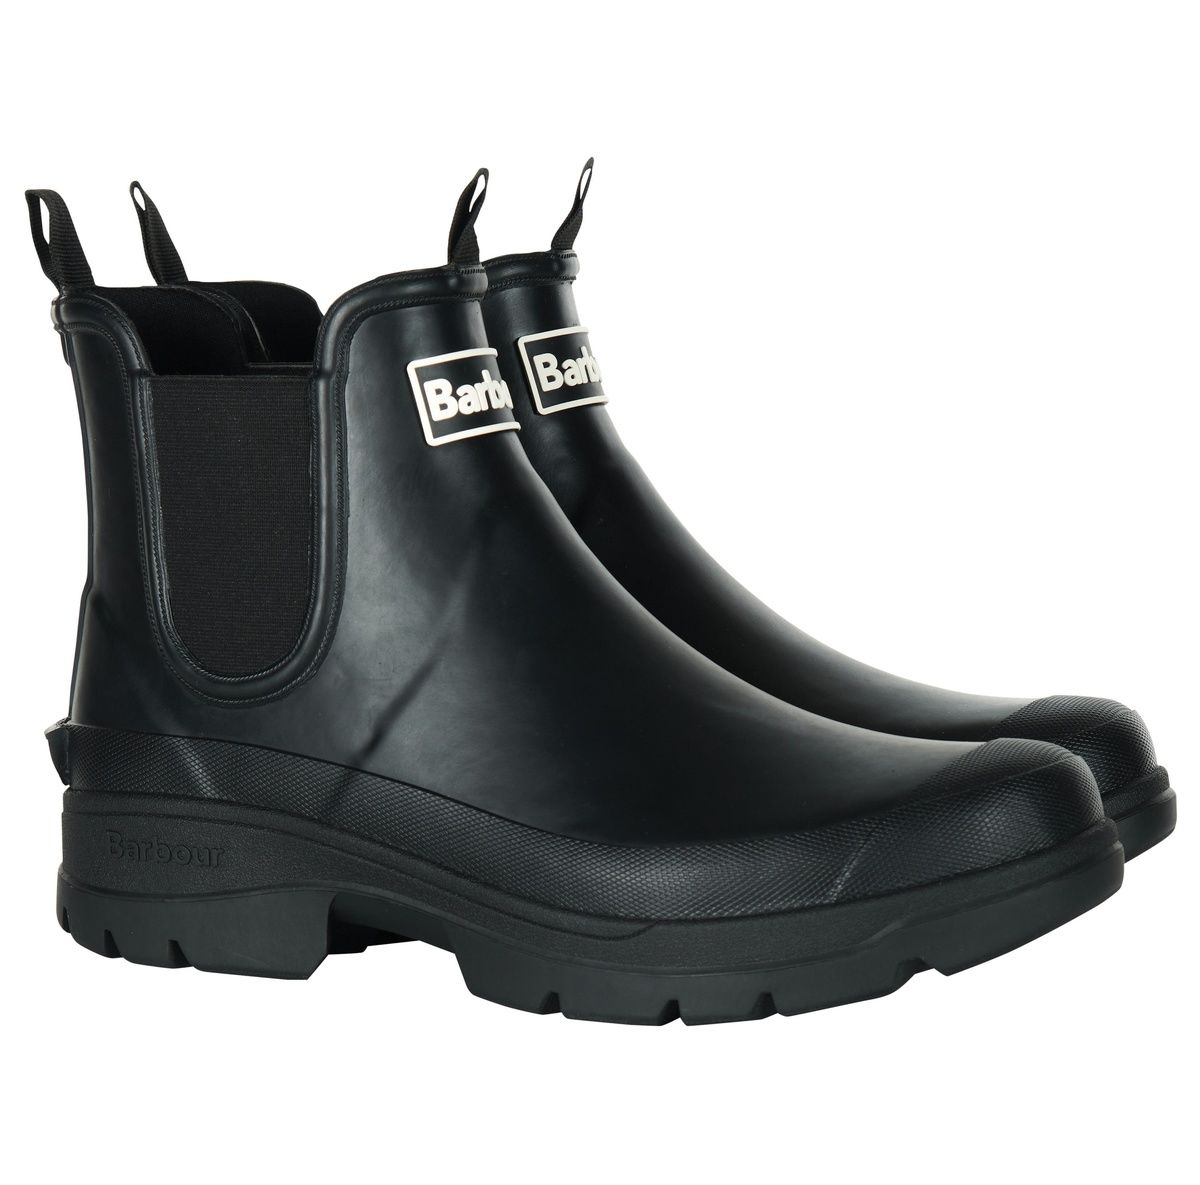 Barbour Nimbus Wellie Black Boots Mrf0028-Bk31 In Size 10 In Plain Black